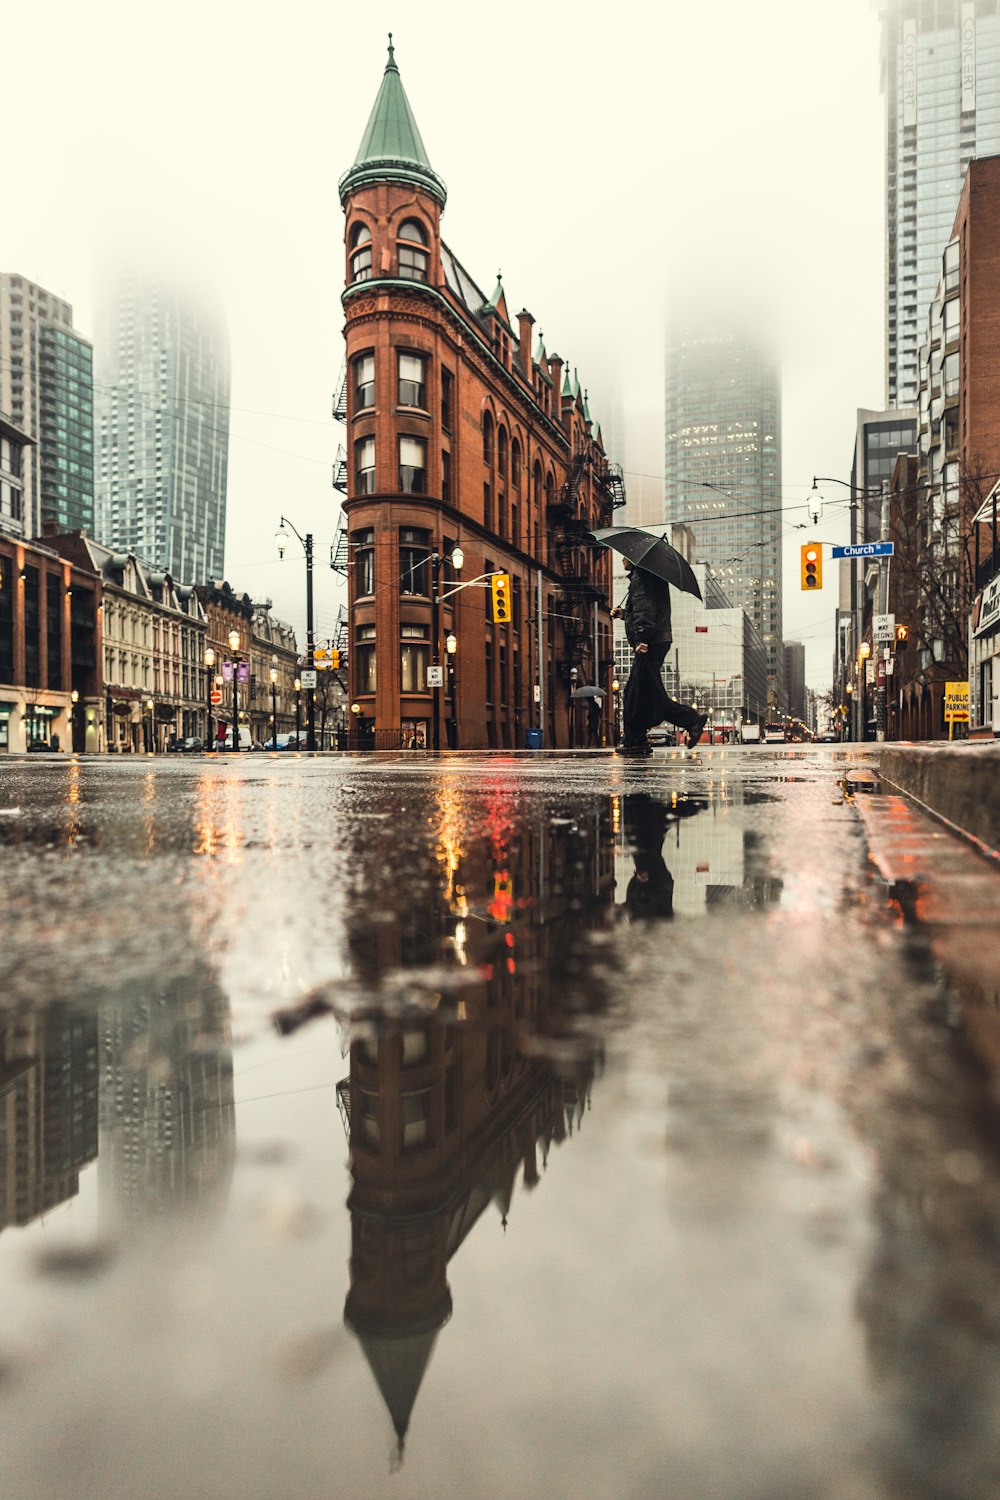 550+ Rain City Pictures | Download Free Images on Unsplash